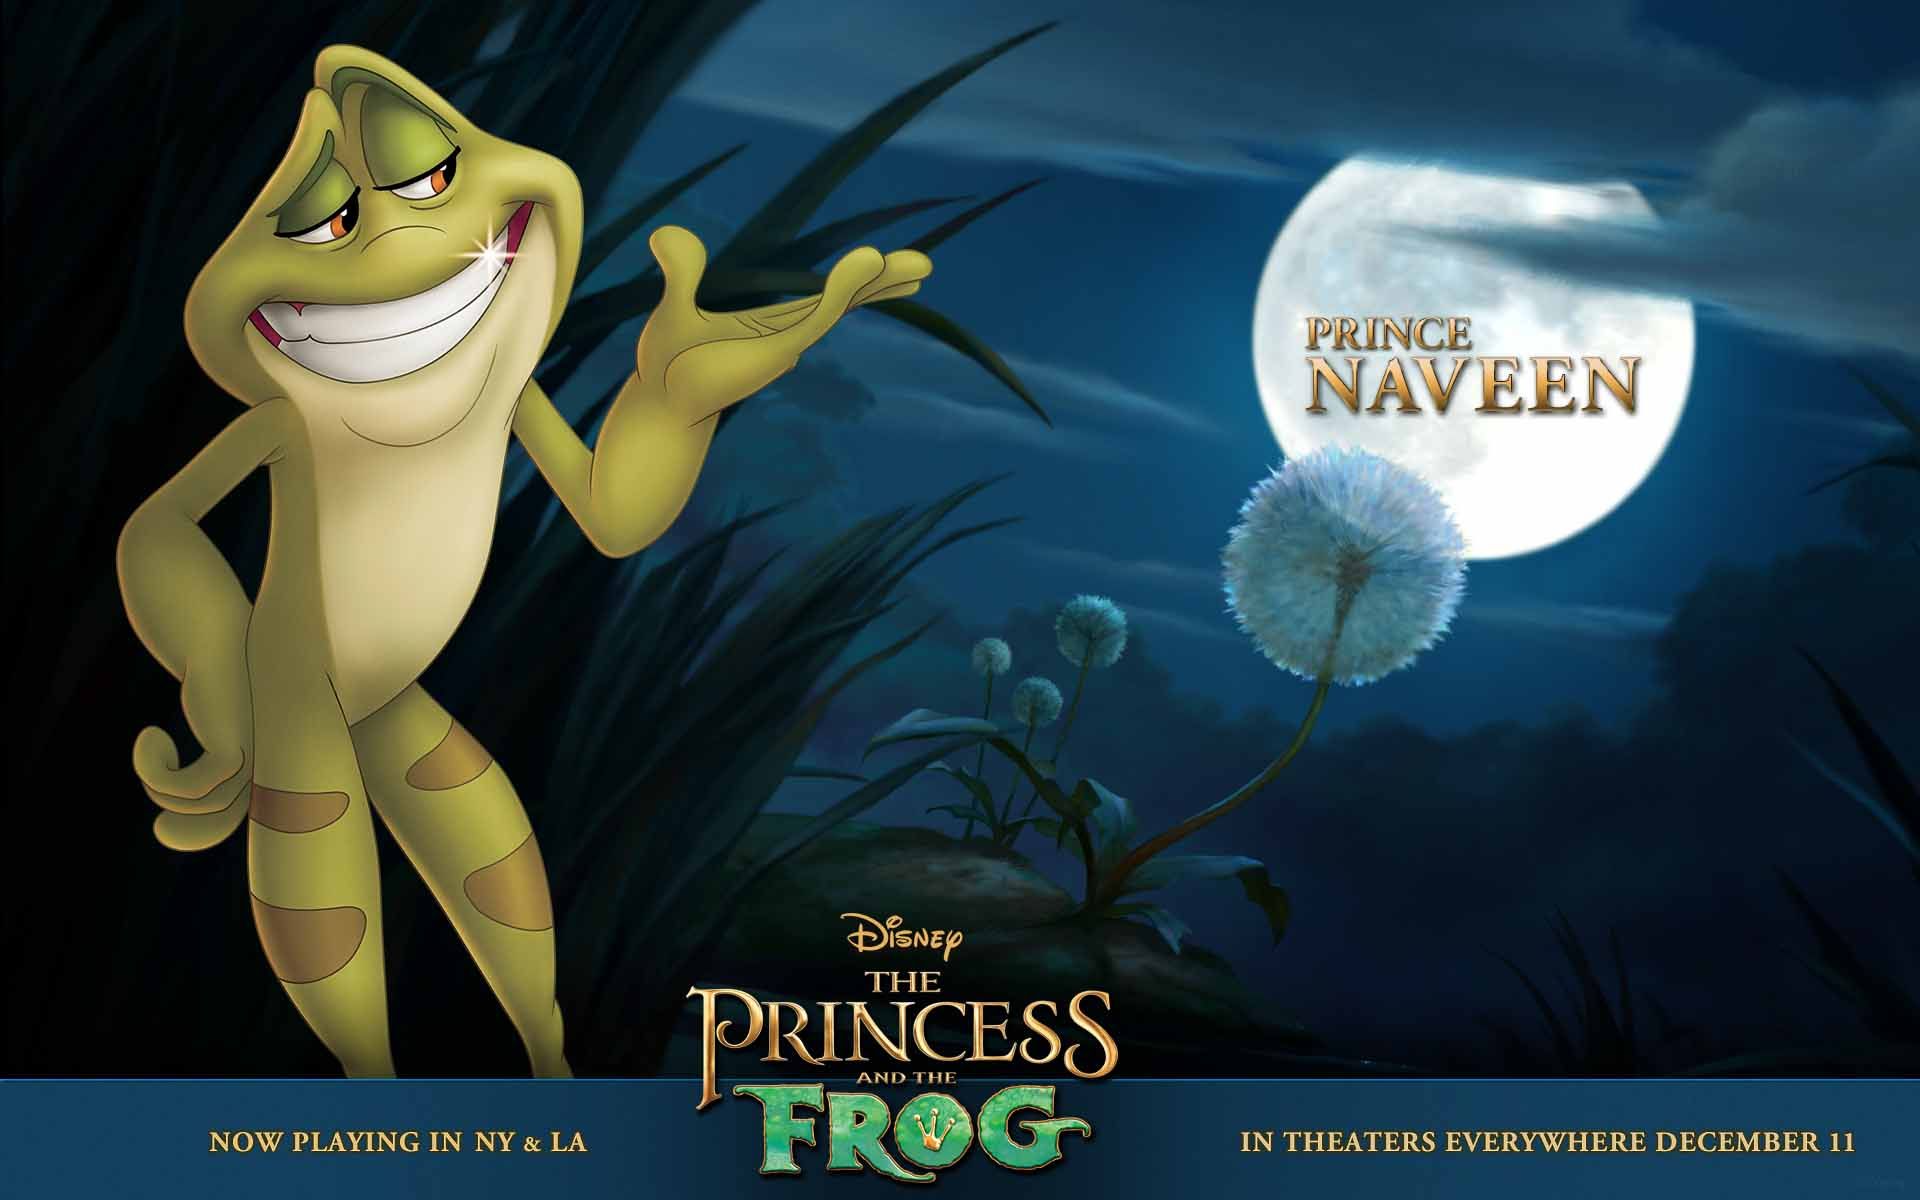 "The Princess and the Frog: Prince Naveen" desktop wallpaper (1920 x 1200 pixels)